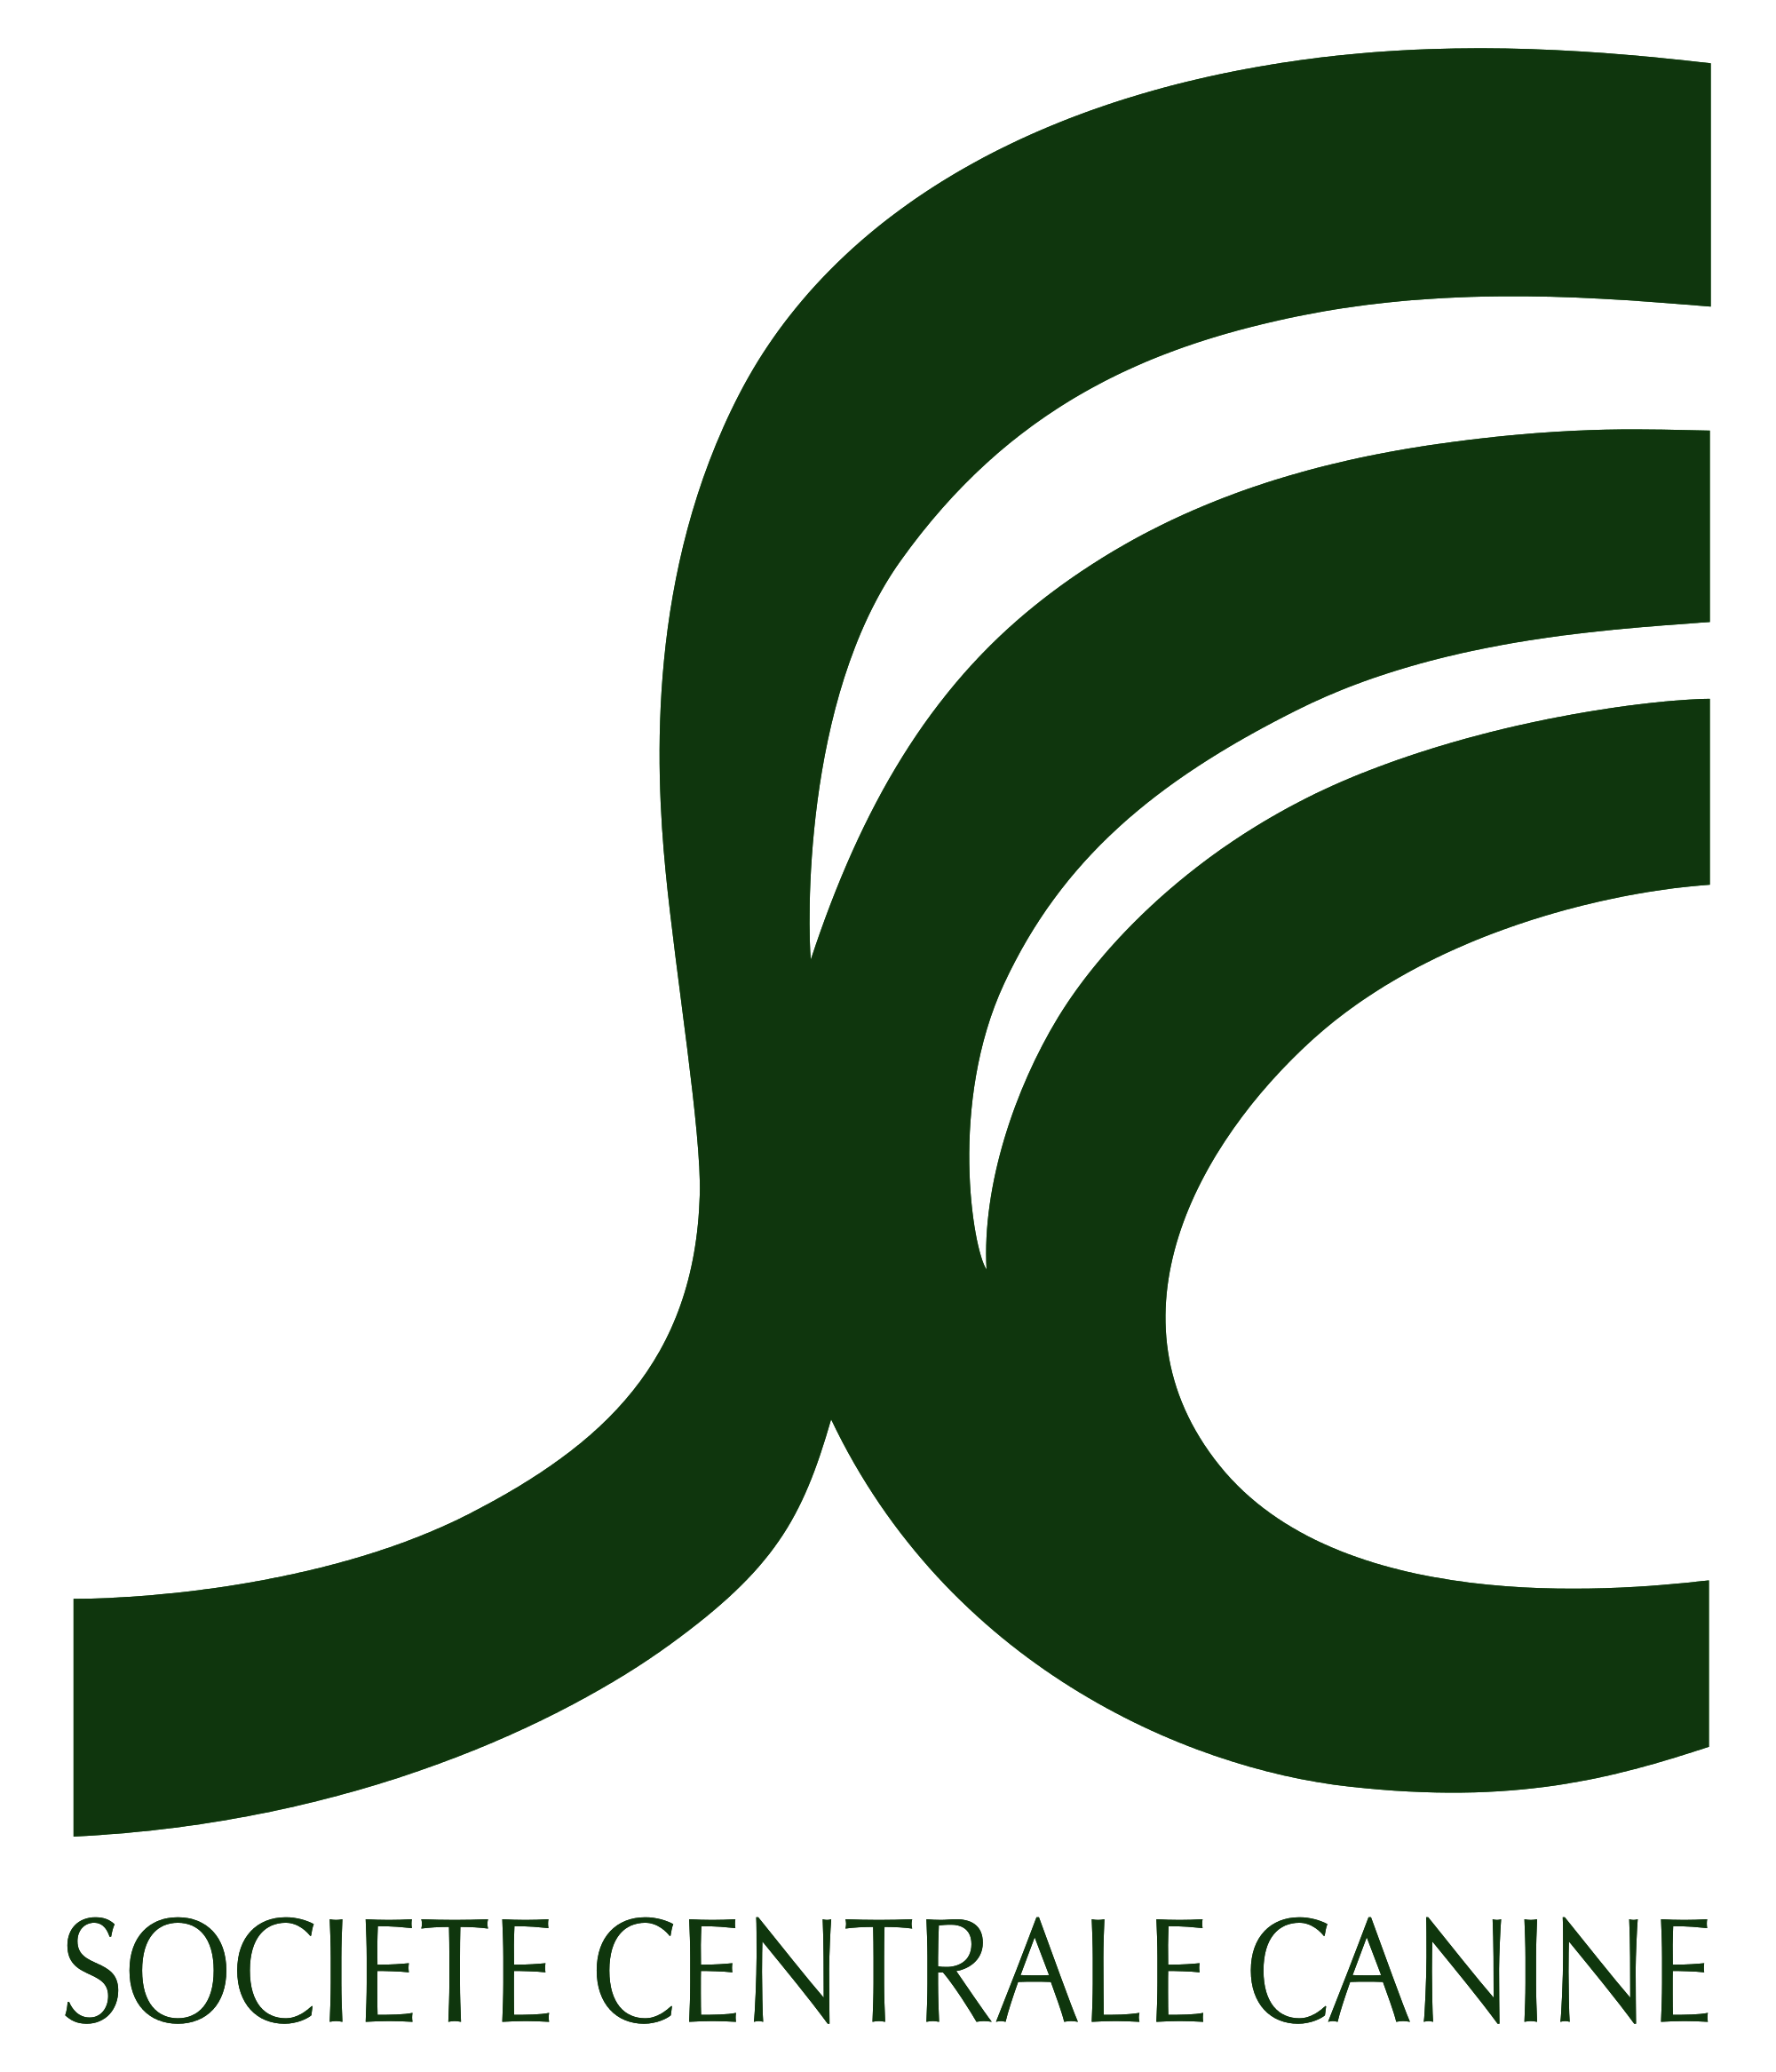 SCC Logo - File:SCC logo.svg - Wikimedia Commons